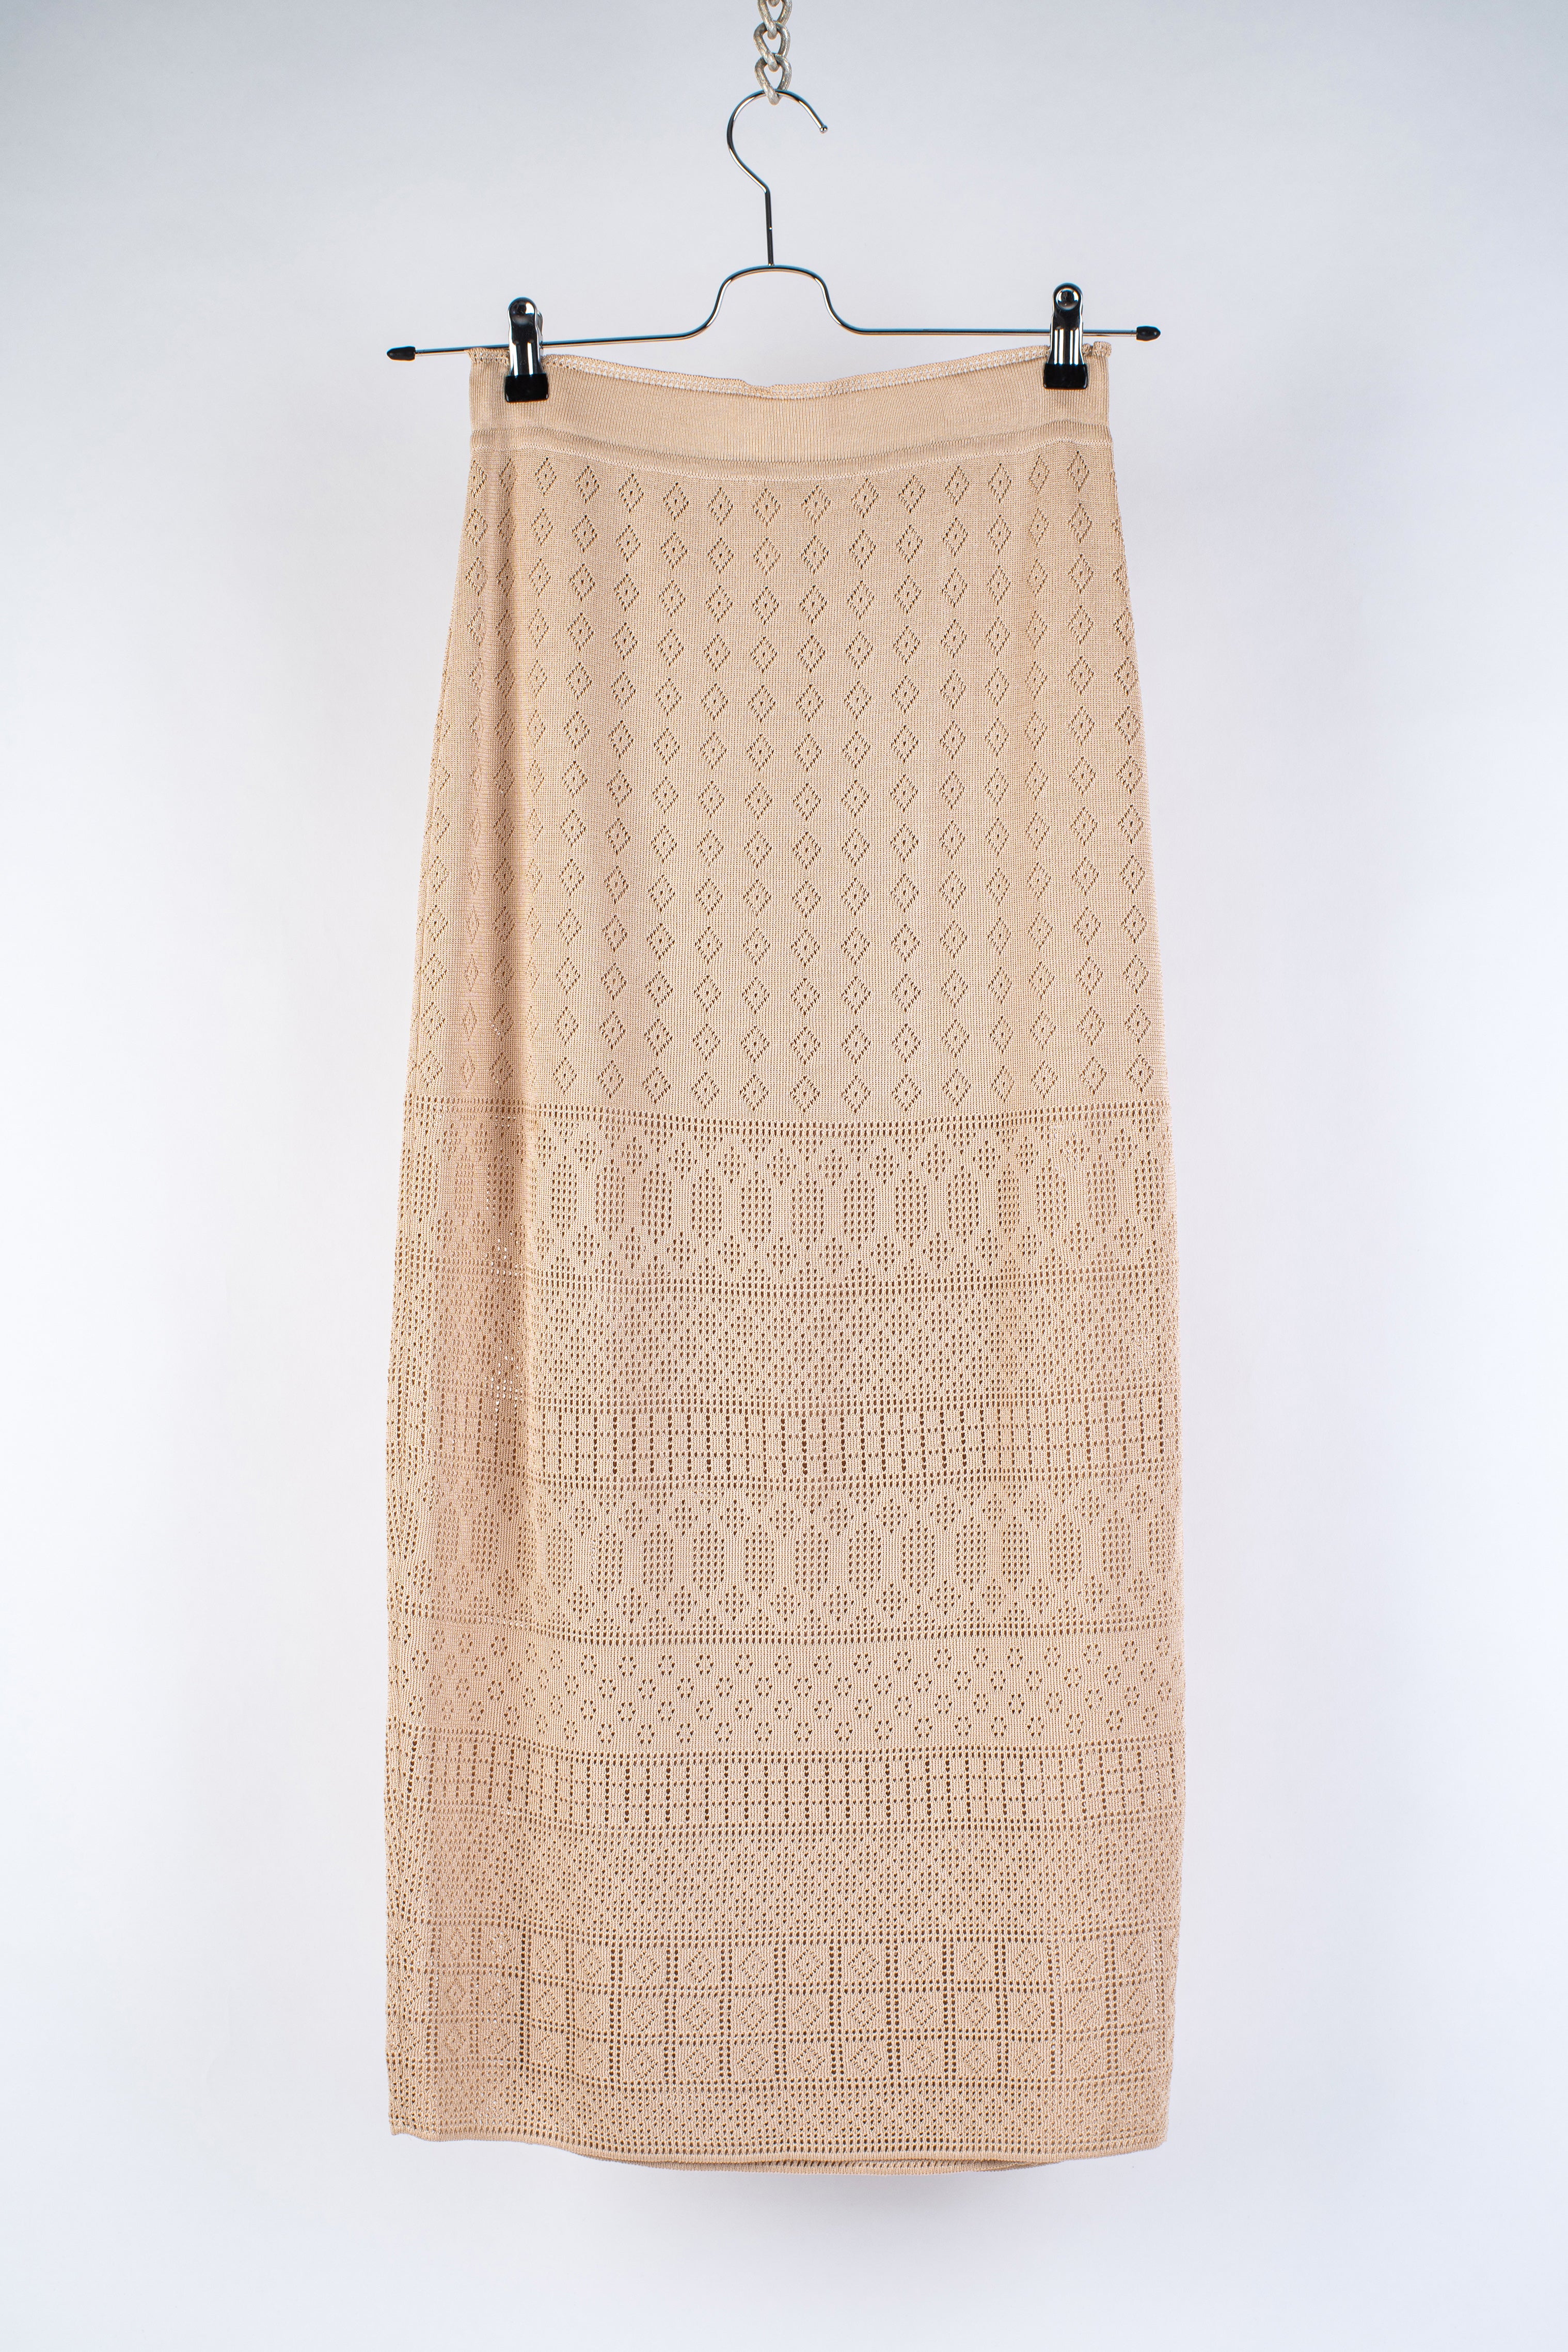 Escada Vintage Beige Crochet Knit Silk Blend Wrap Skirt, S